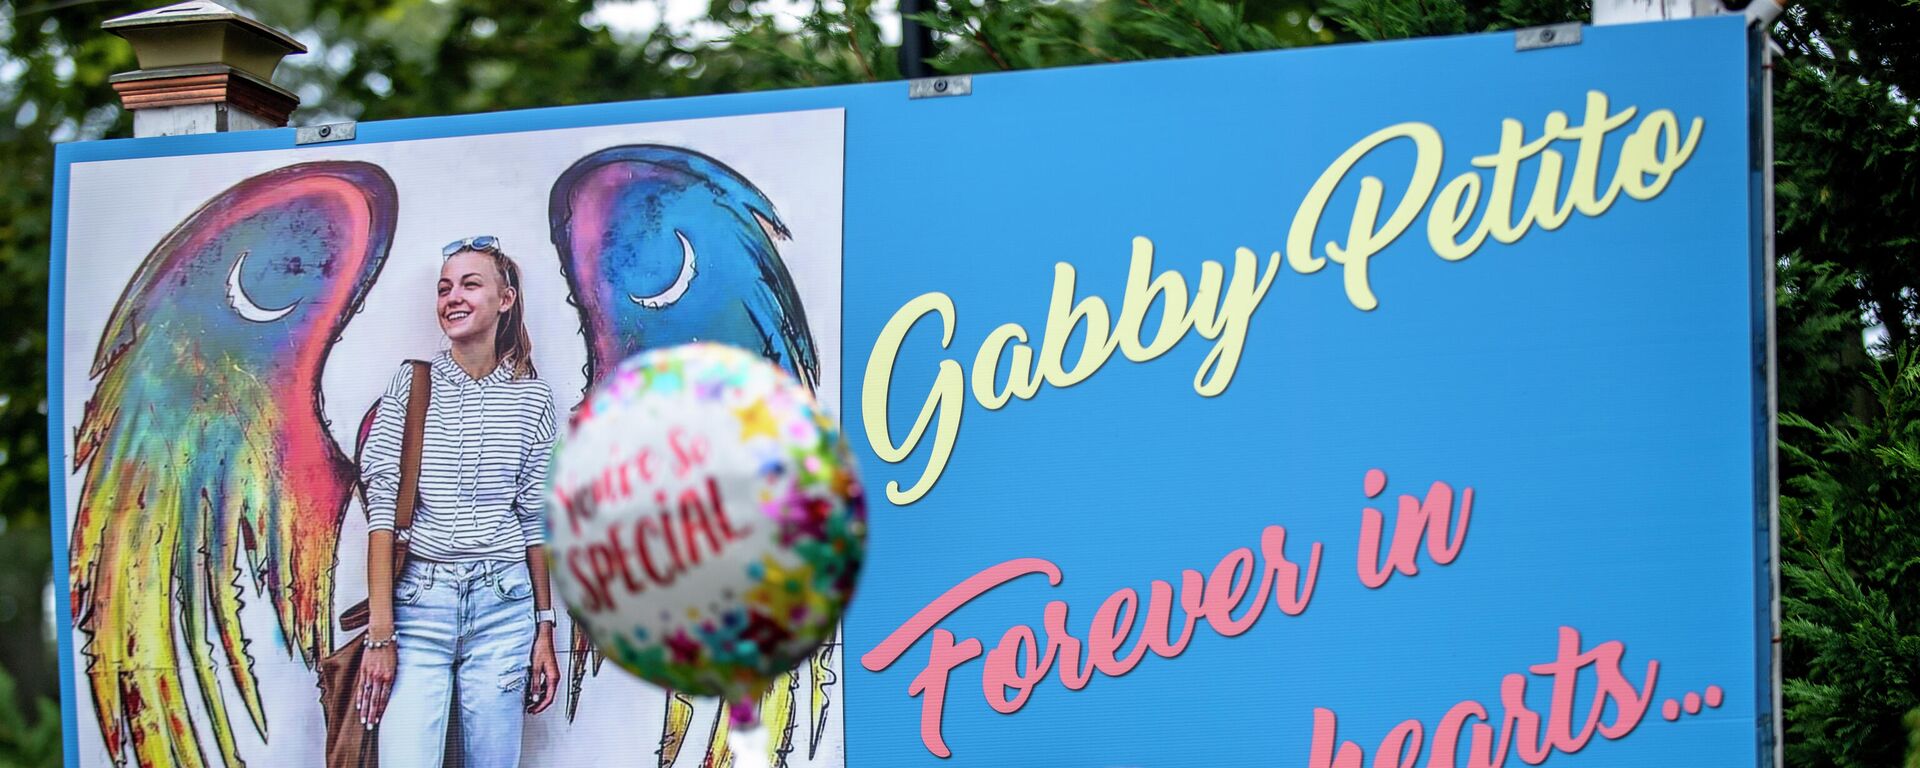 Memorials for Gabby Petito are scattered across her hometown of Blue Point, New York on Sept. 23, 2021 - Sputnik International, 1920, 13.03.2022